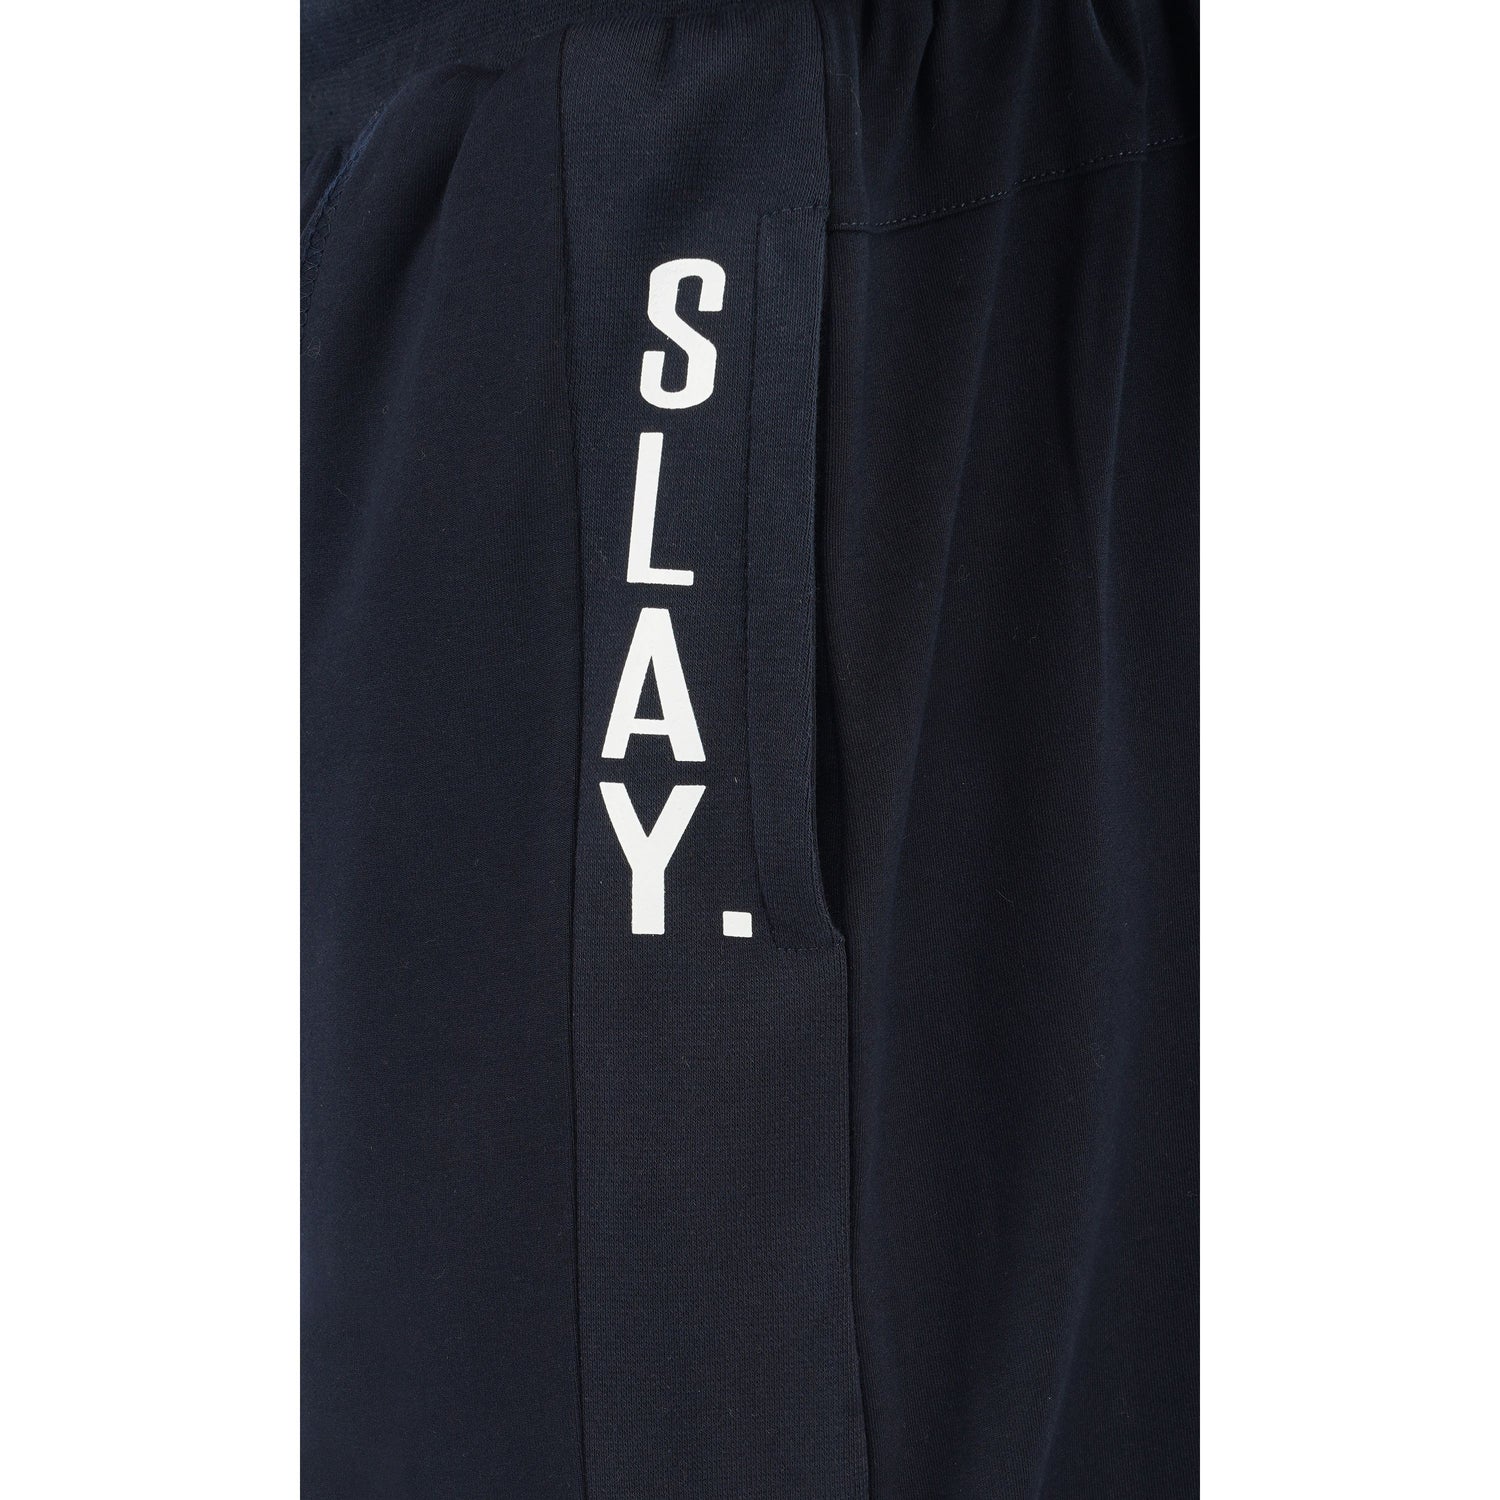 SLAY. Men's Casual Navy Blue Shorts-clothing-to-slay.myshopify.com-Men's Short